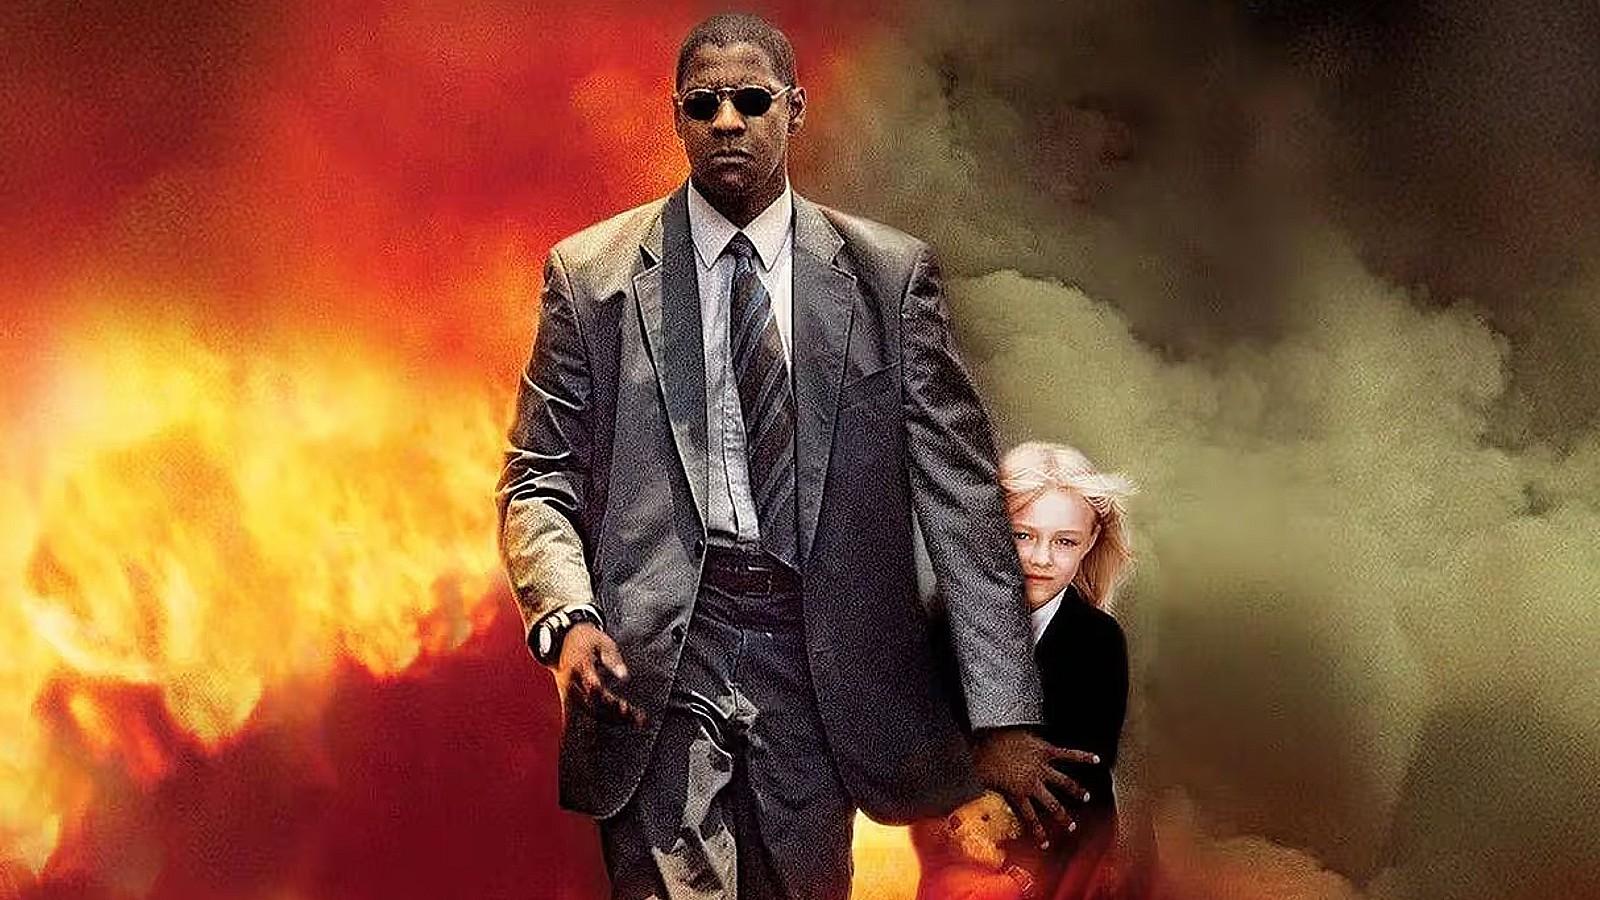 Denzel Washington and Dakota Fanning on the Man on Fire poster